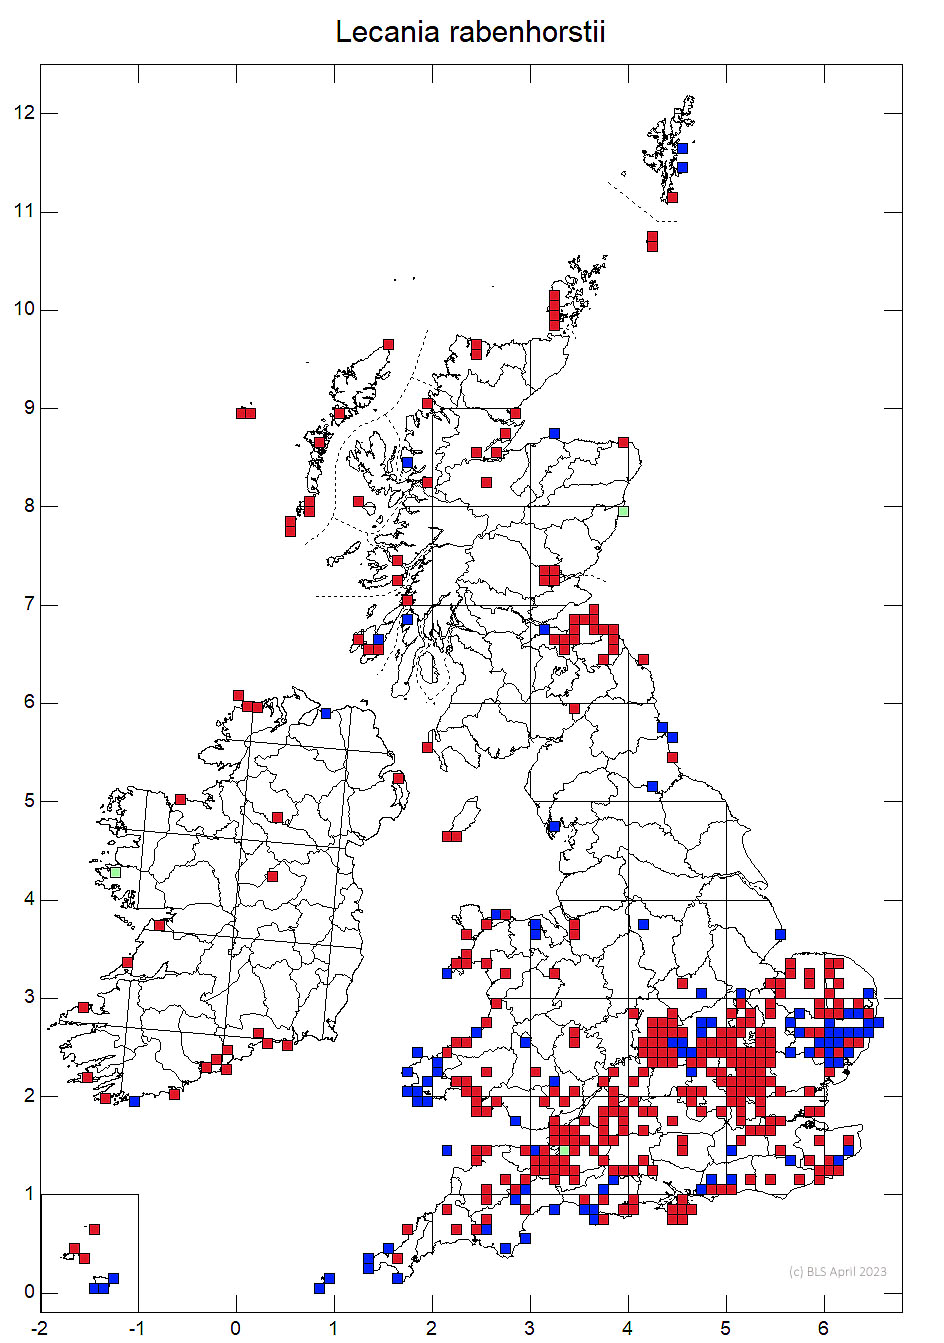 Lecania rabenhorstii 10km sq distribution map